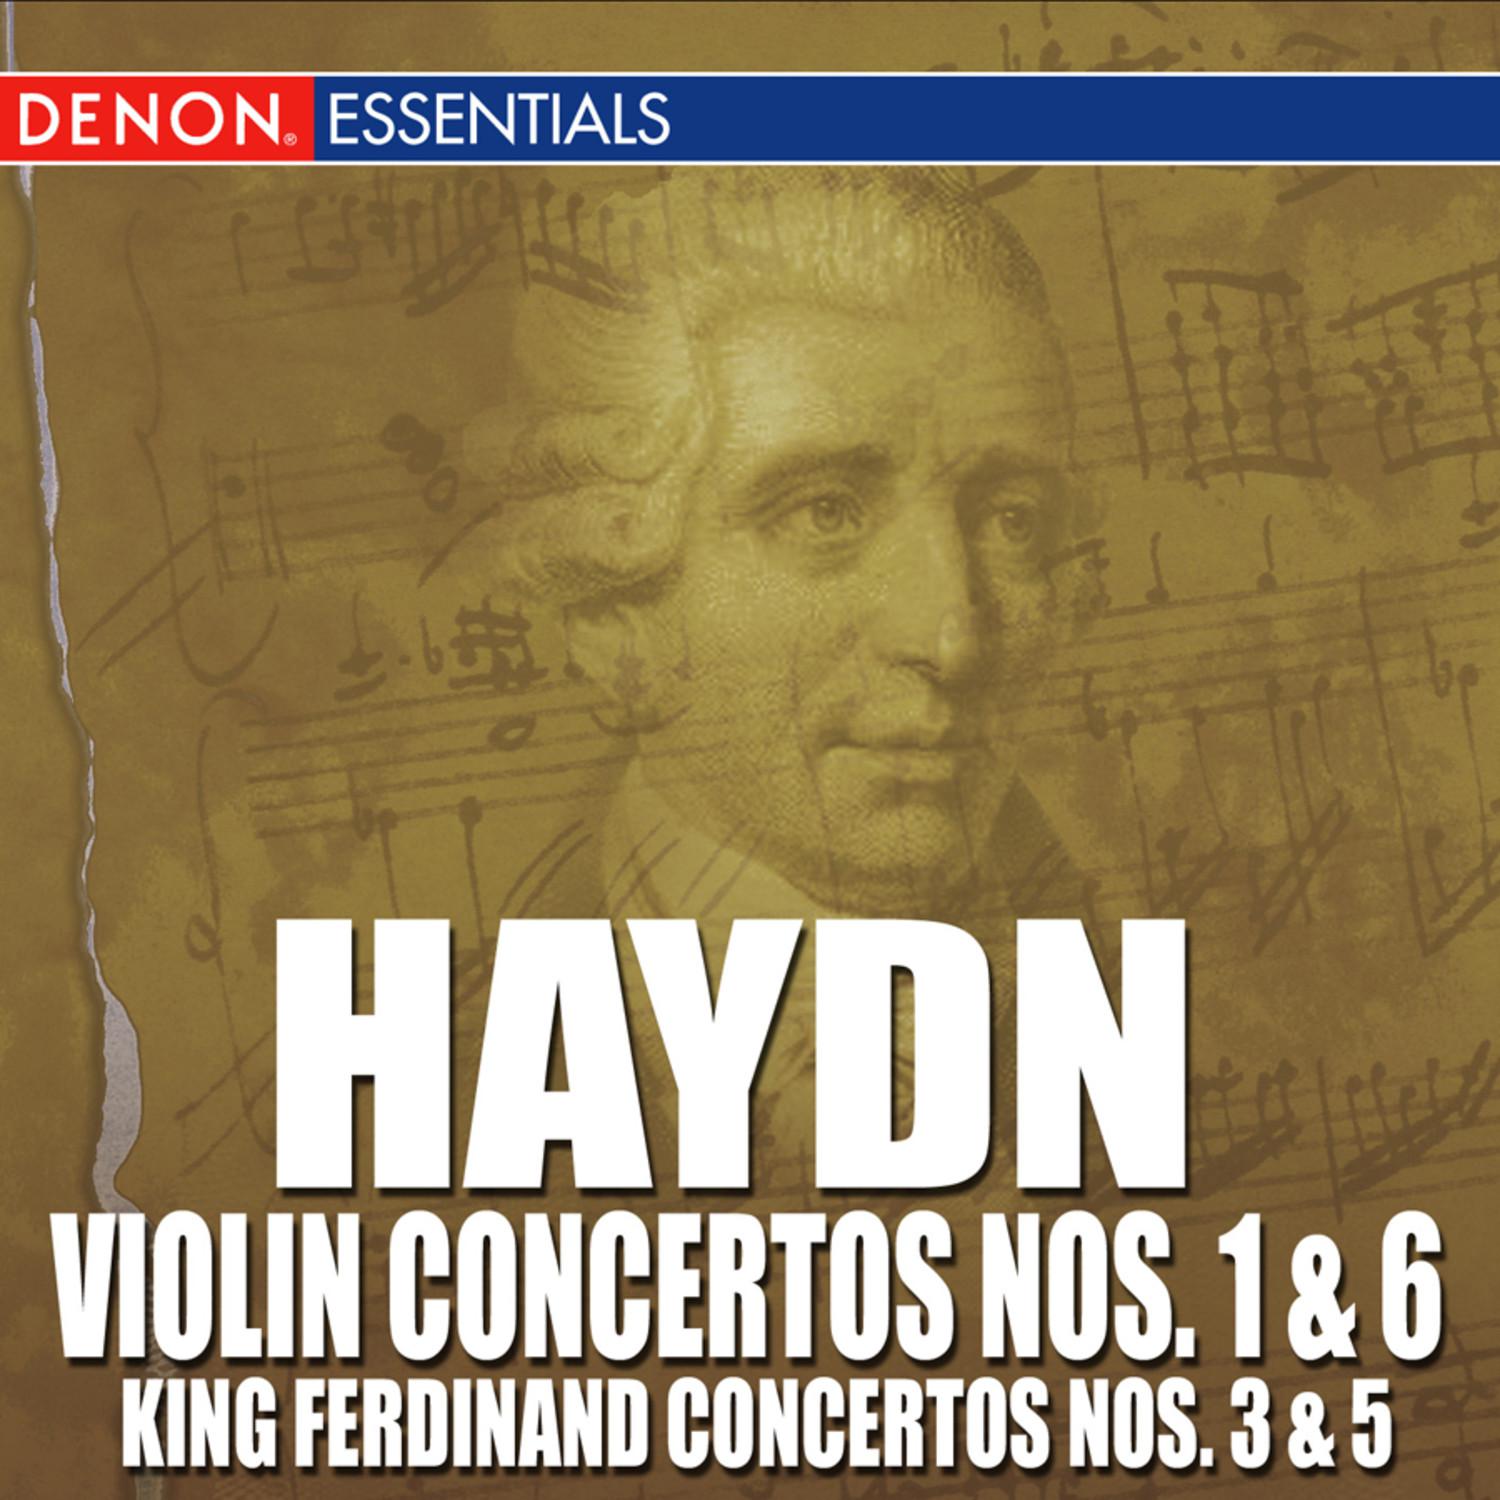 Concerto No. 3 for King Ferdinand IV of Napoli in G Major, Hob. VII / 3 "Lyren Concerto No. 3": I. Allegro con Spirito